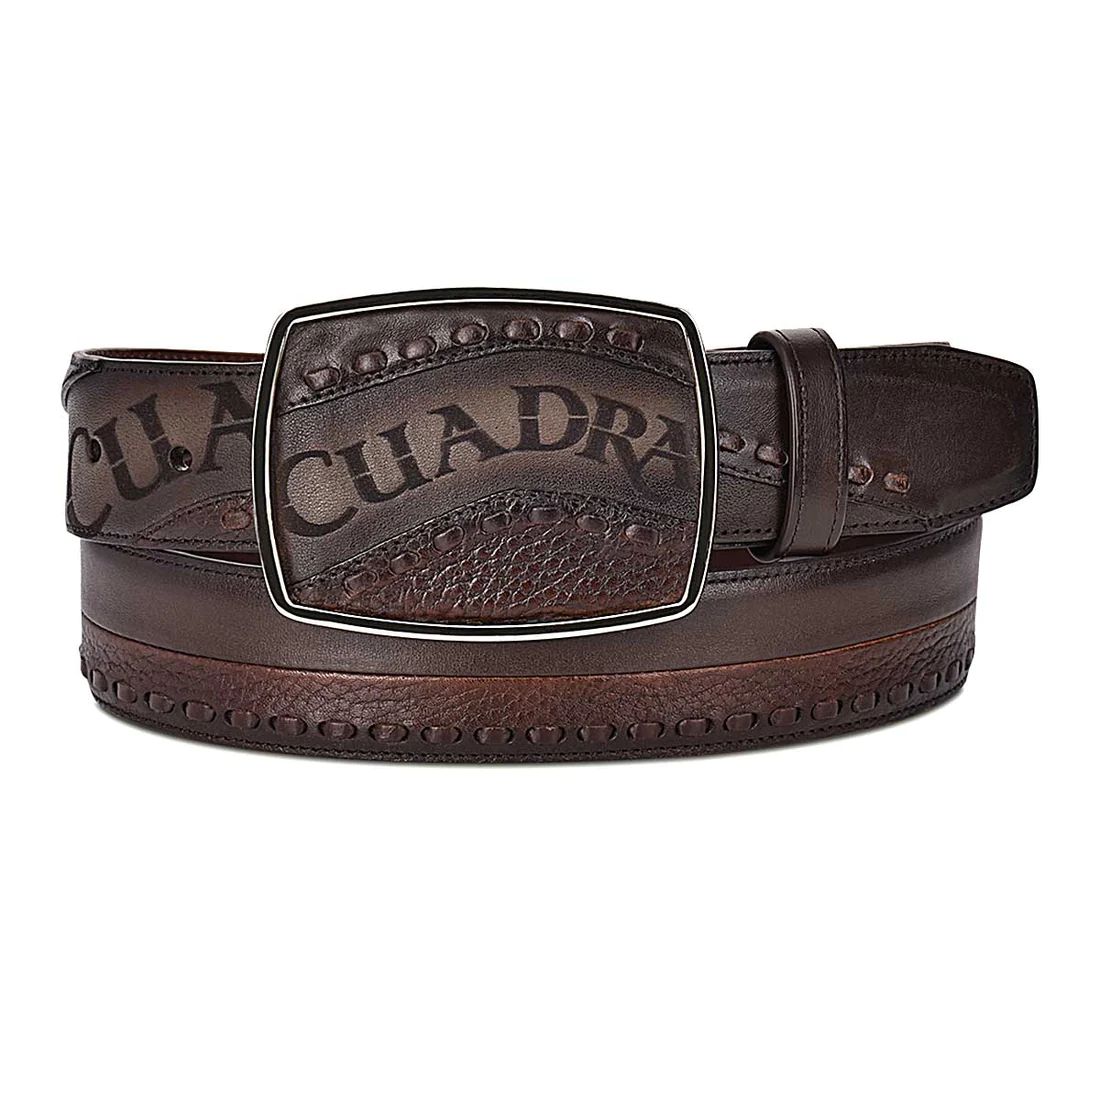 Cuadra | Hand-Painted Chocolate Brown Leather Western Belt